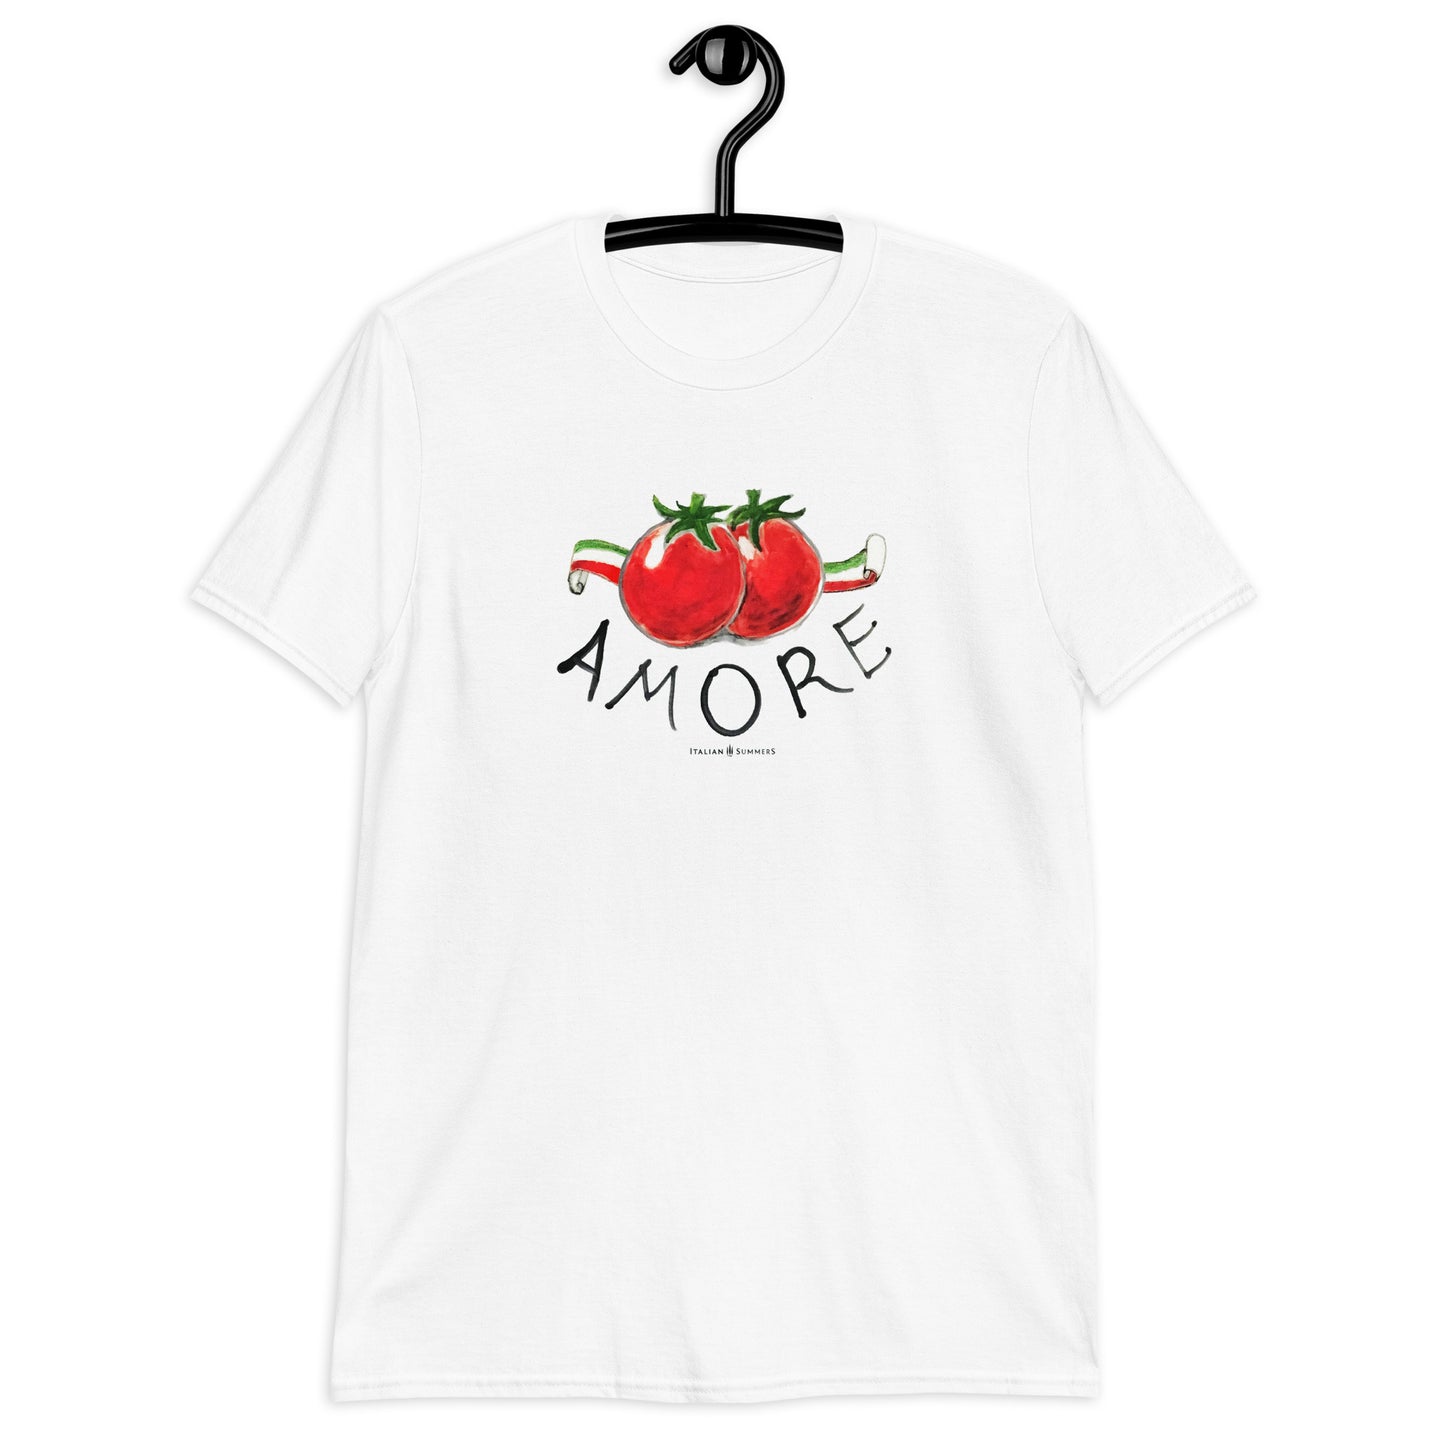 T Shirt AMORE & POMODORI, love in the kitchen, the Italian way